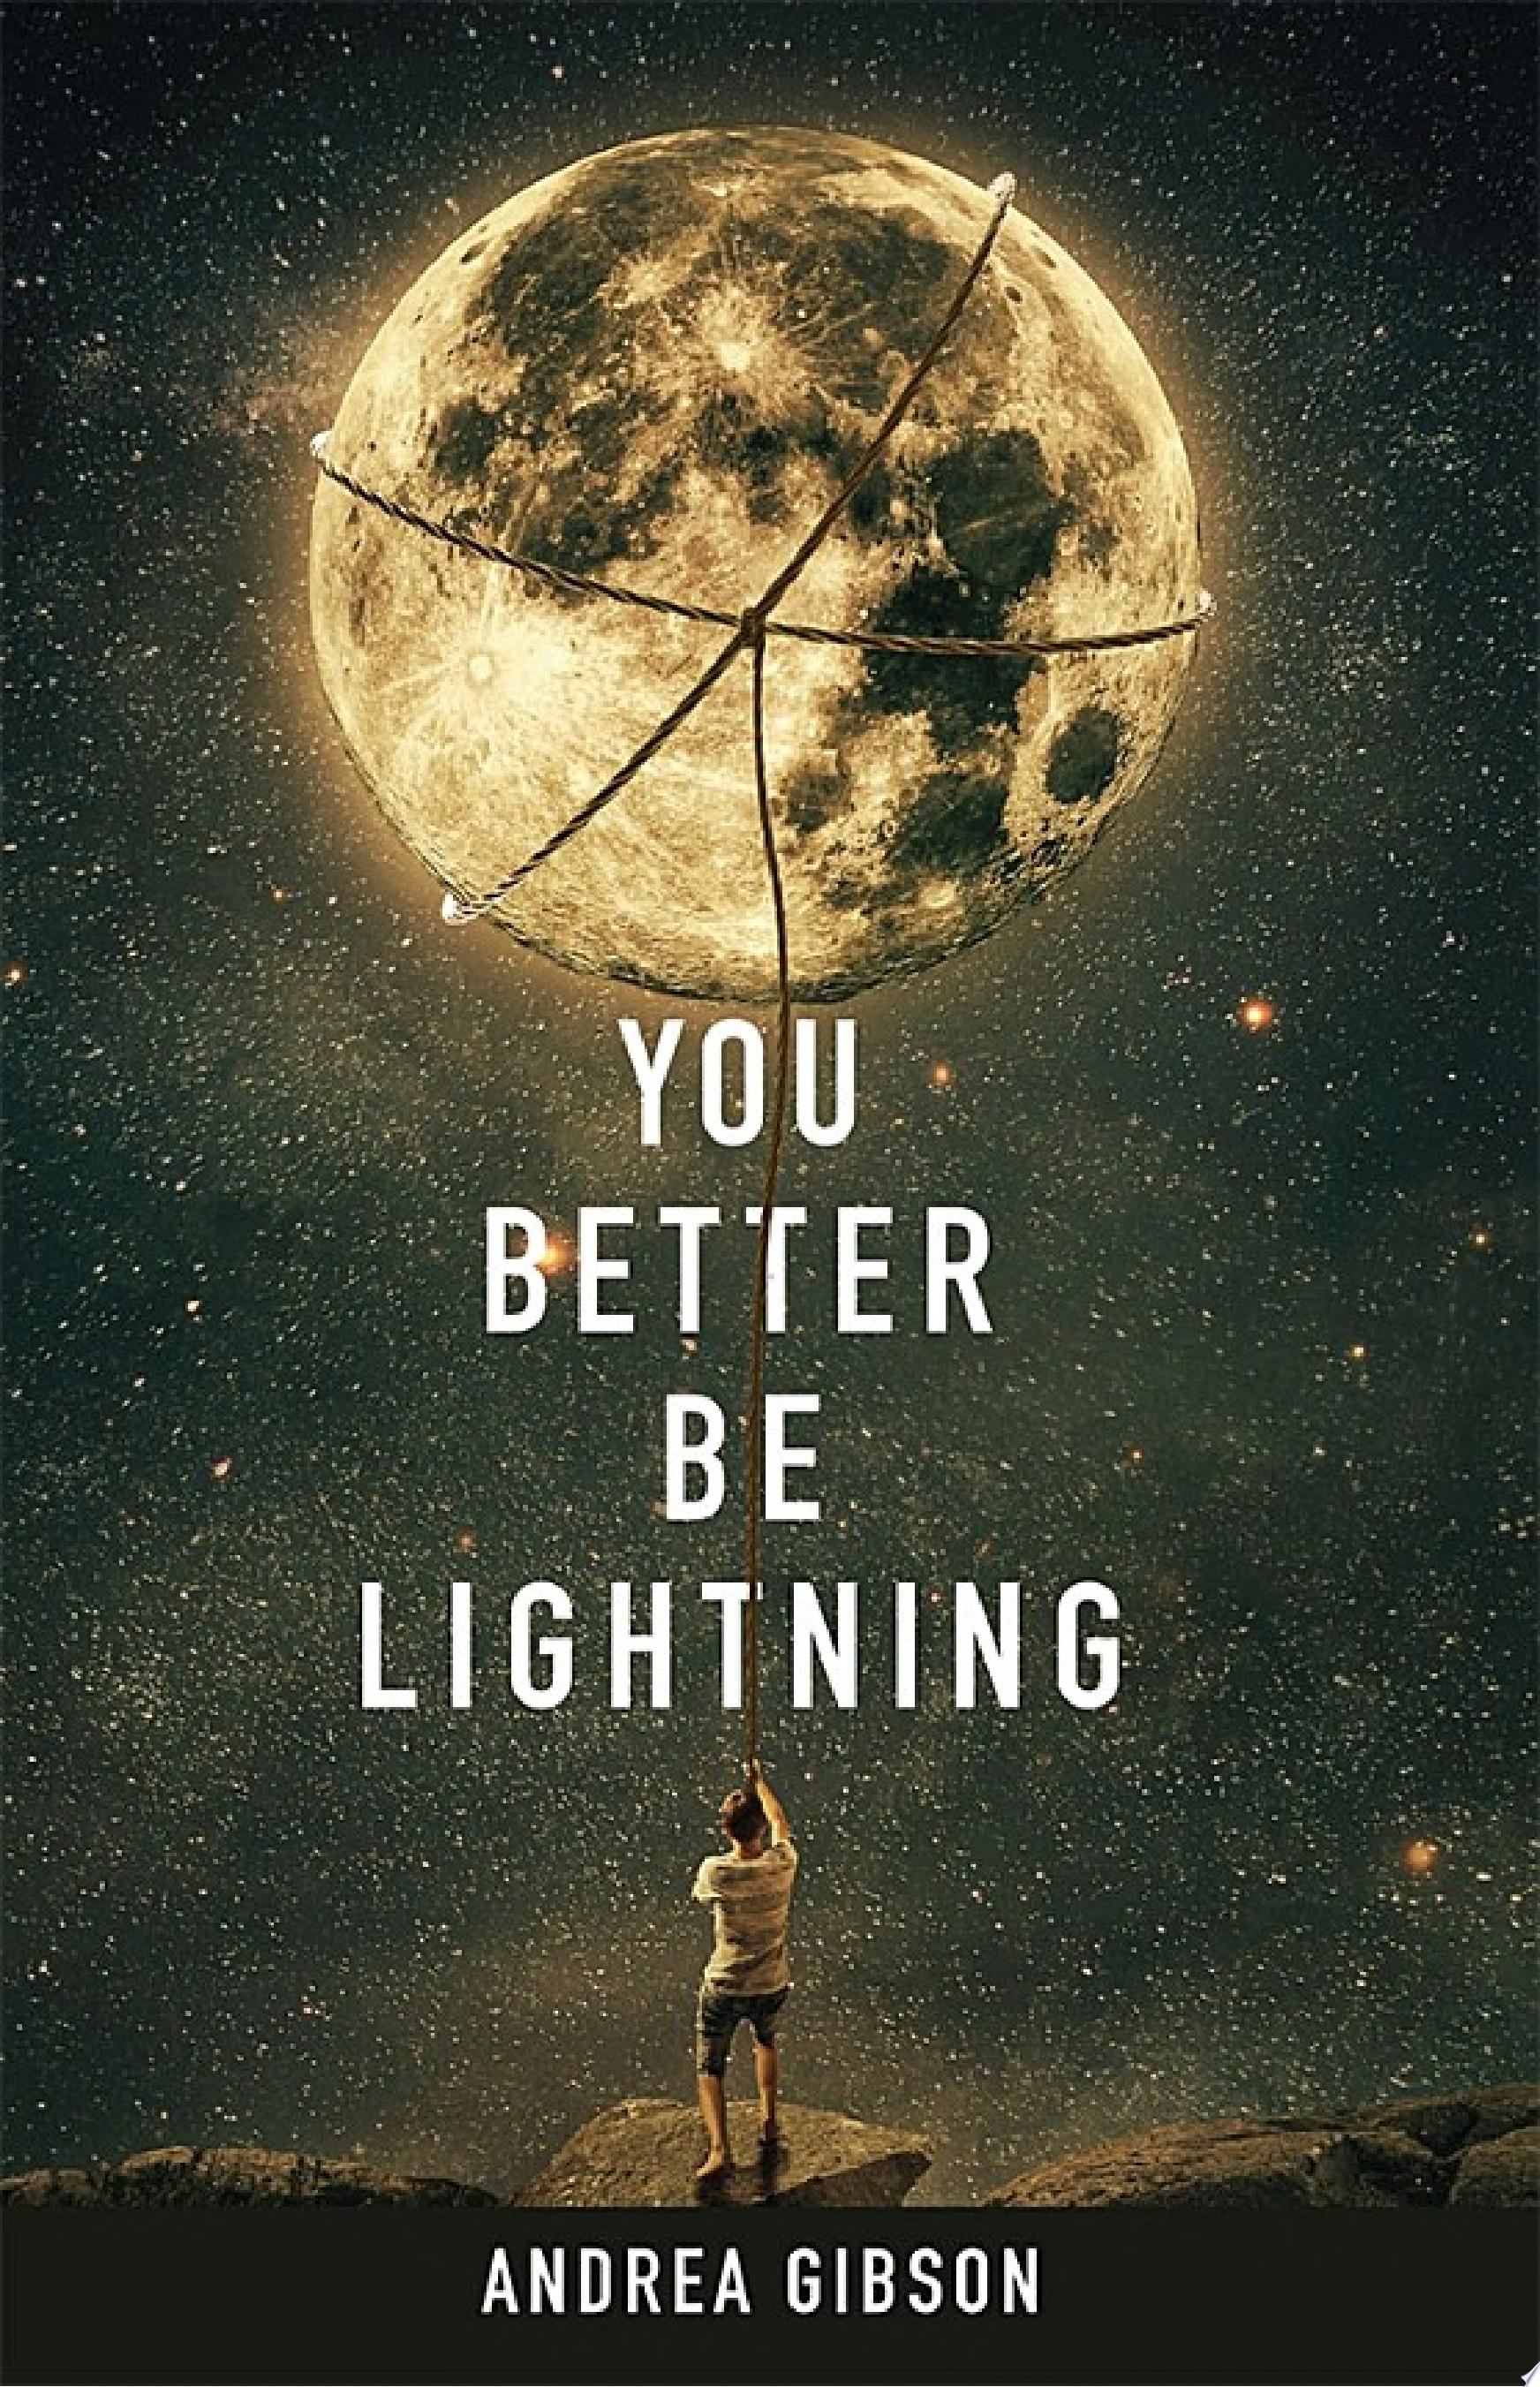 Image for "You Better Be Lightning"